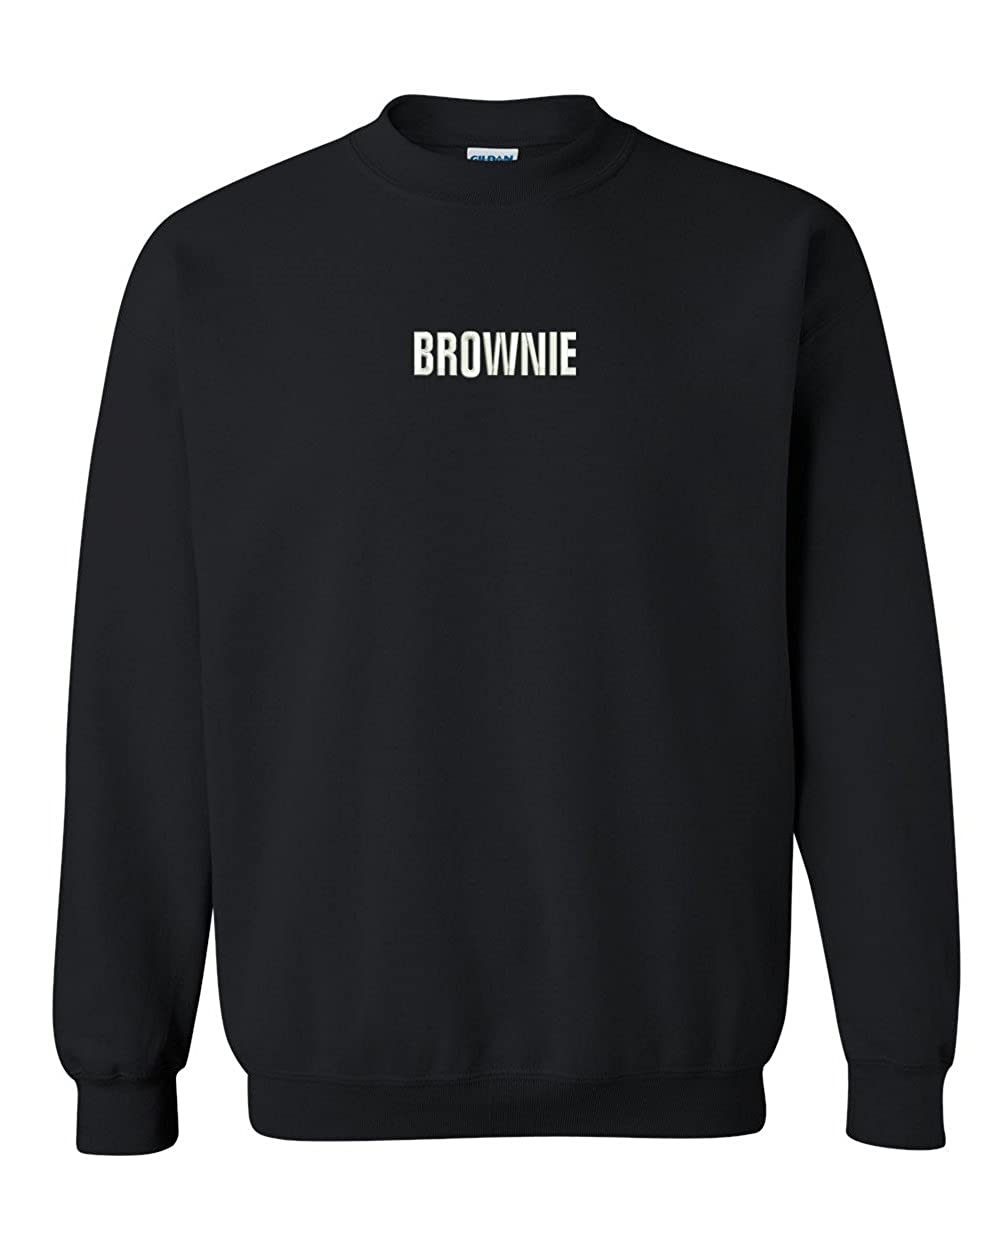 Trendy Apparel Shop Brownie Embroidered Crewneck Sweatshirt